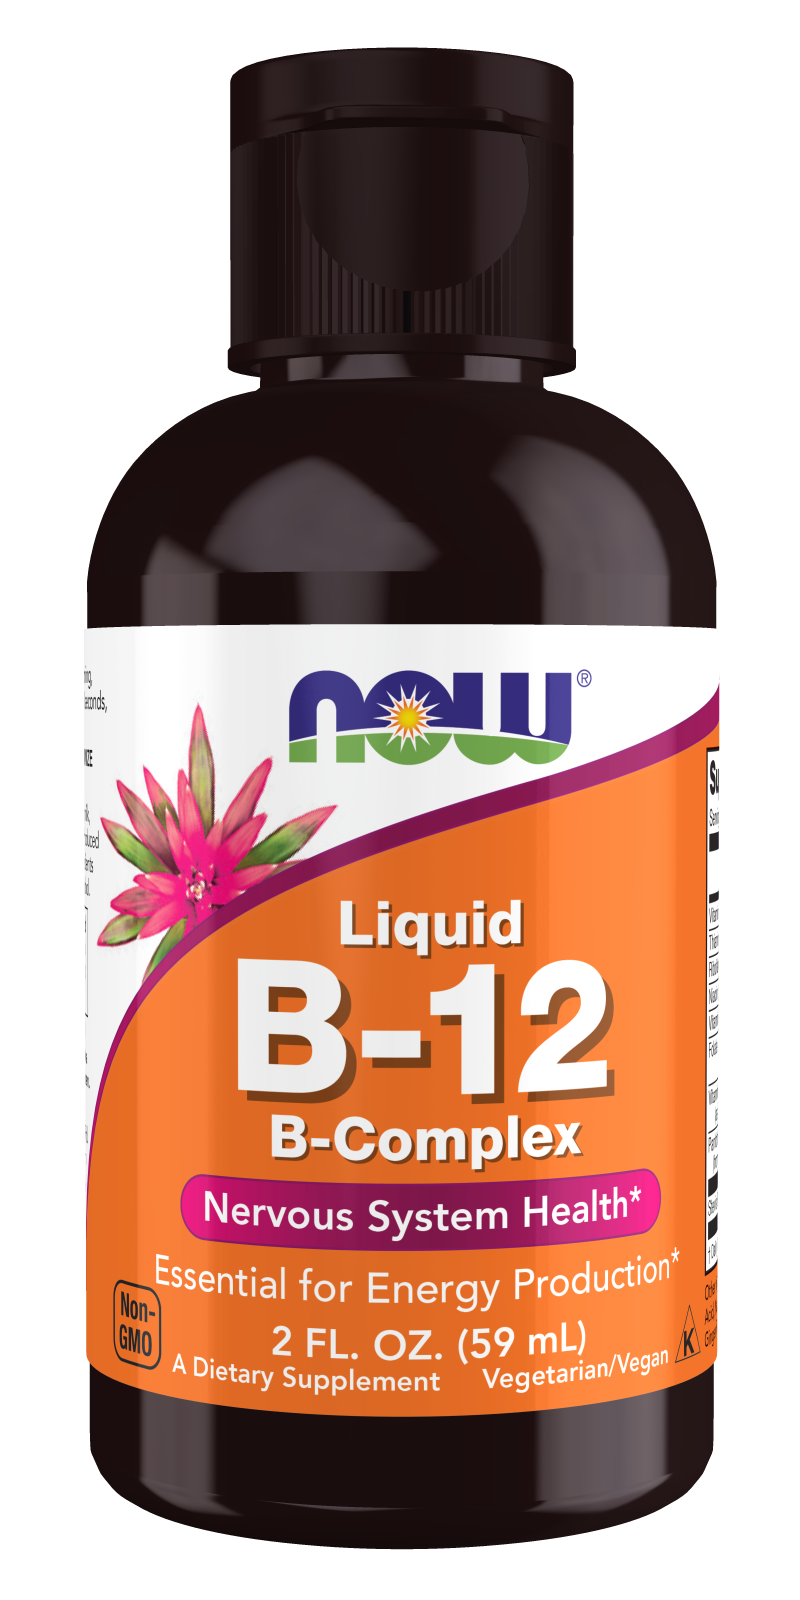 Vitamin B-12 Complex Liquid - 2 fl. oz. bottle front